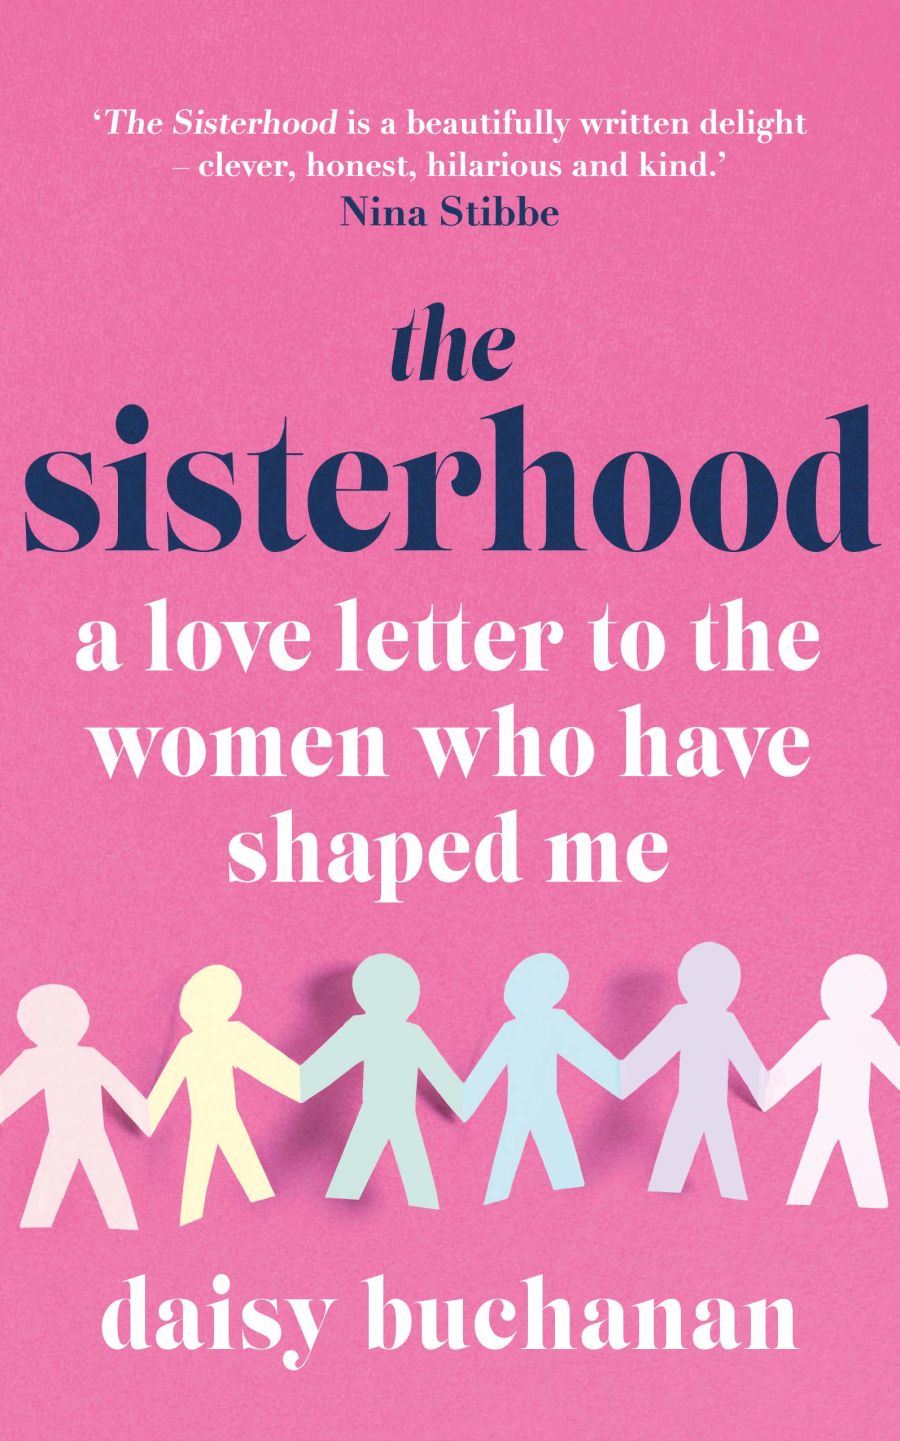 book cover: The Sisterhood, by Daisy Buchanan.